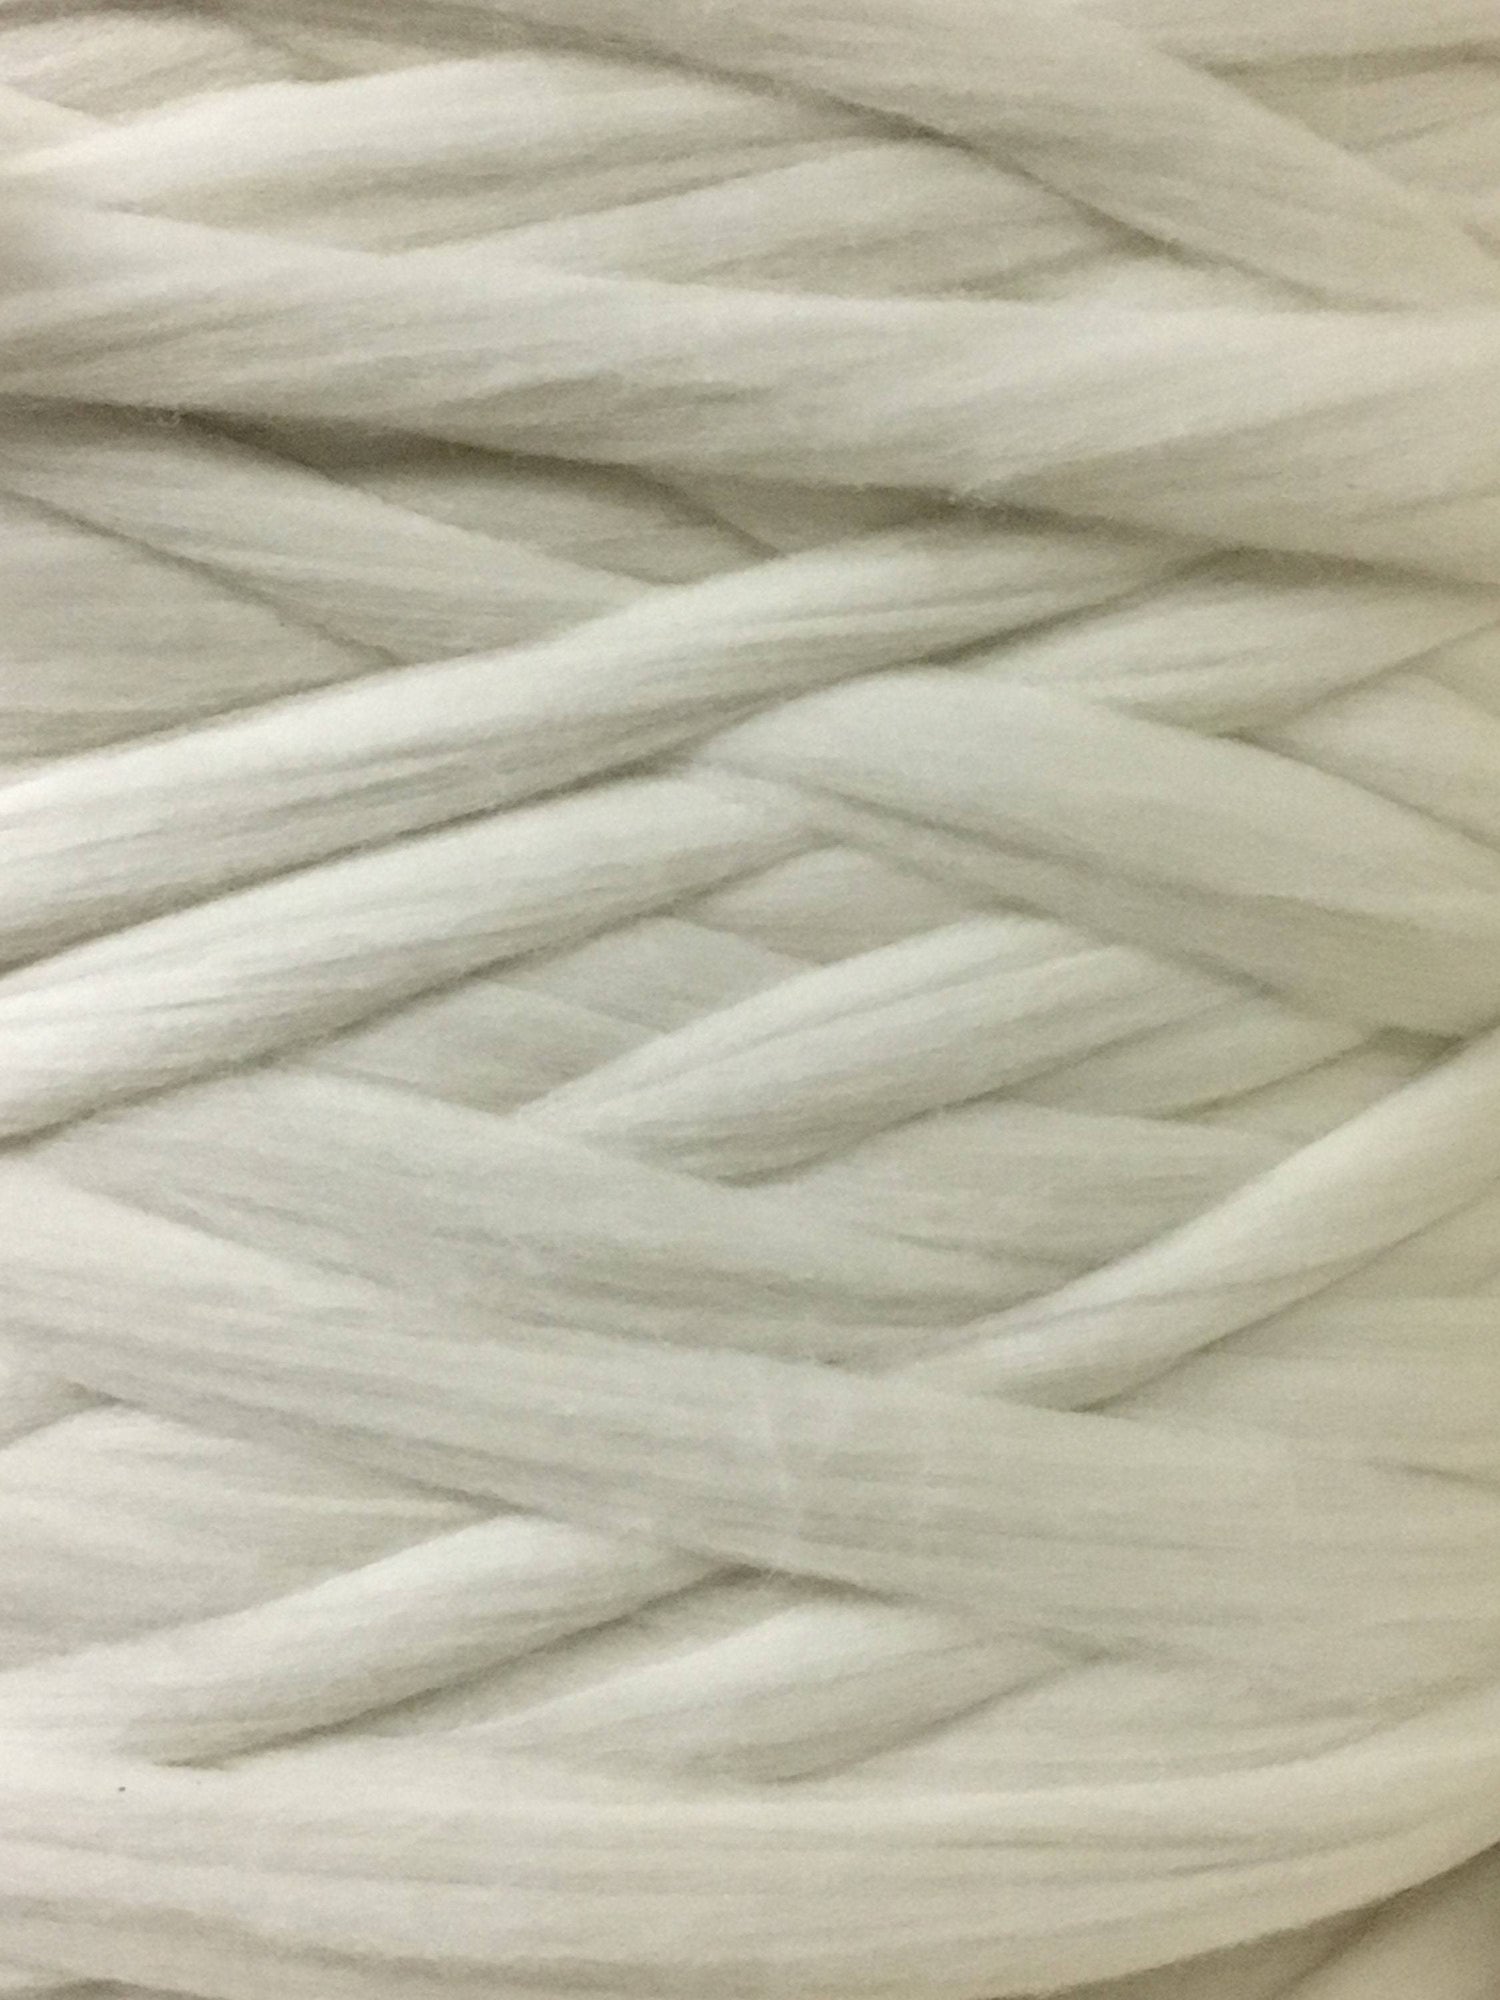 White Wool Top Roving